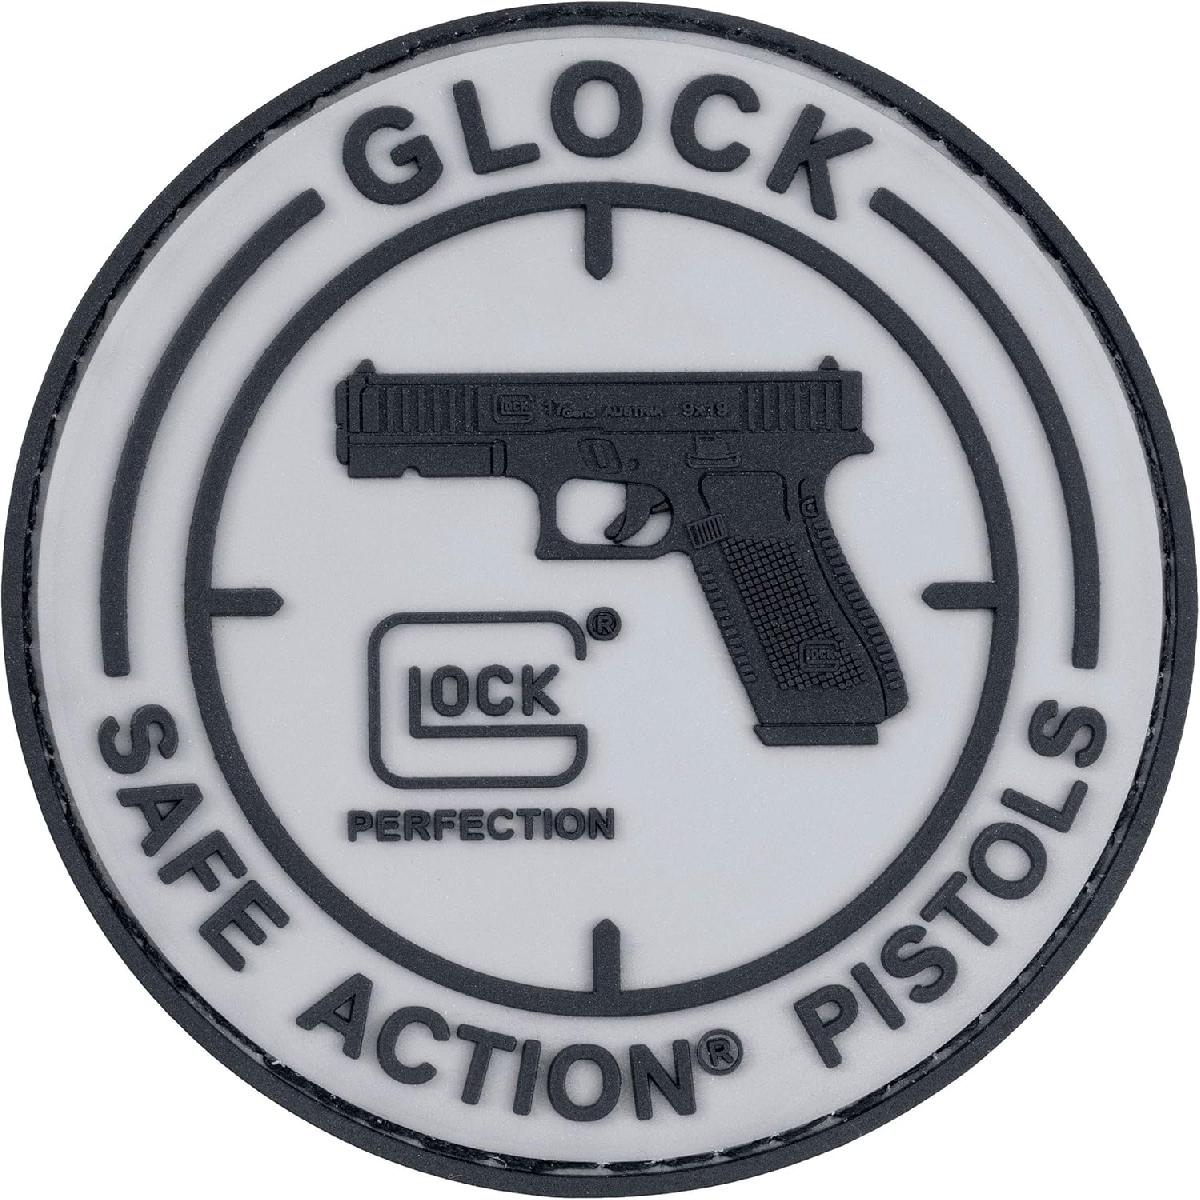 Glock - Glock Patch